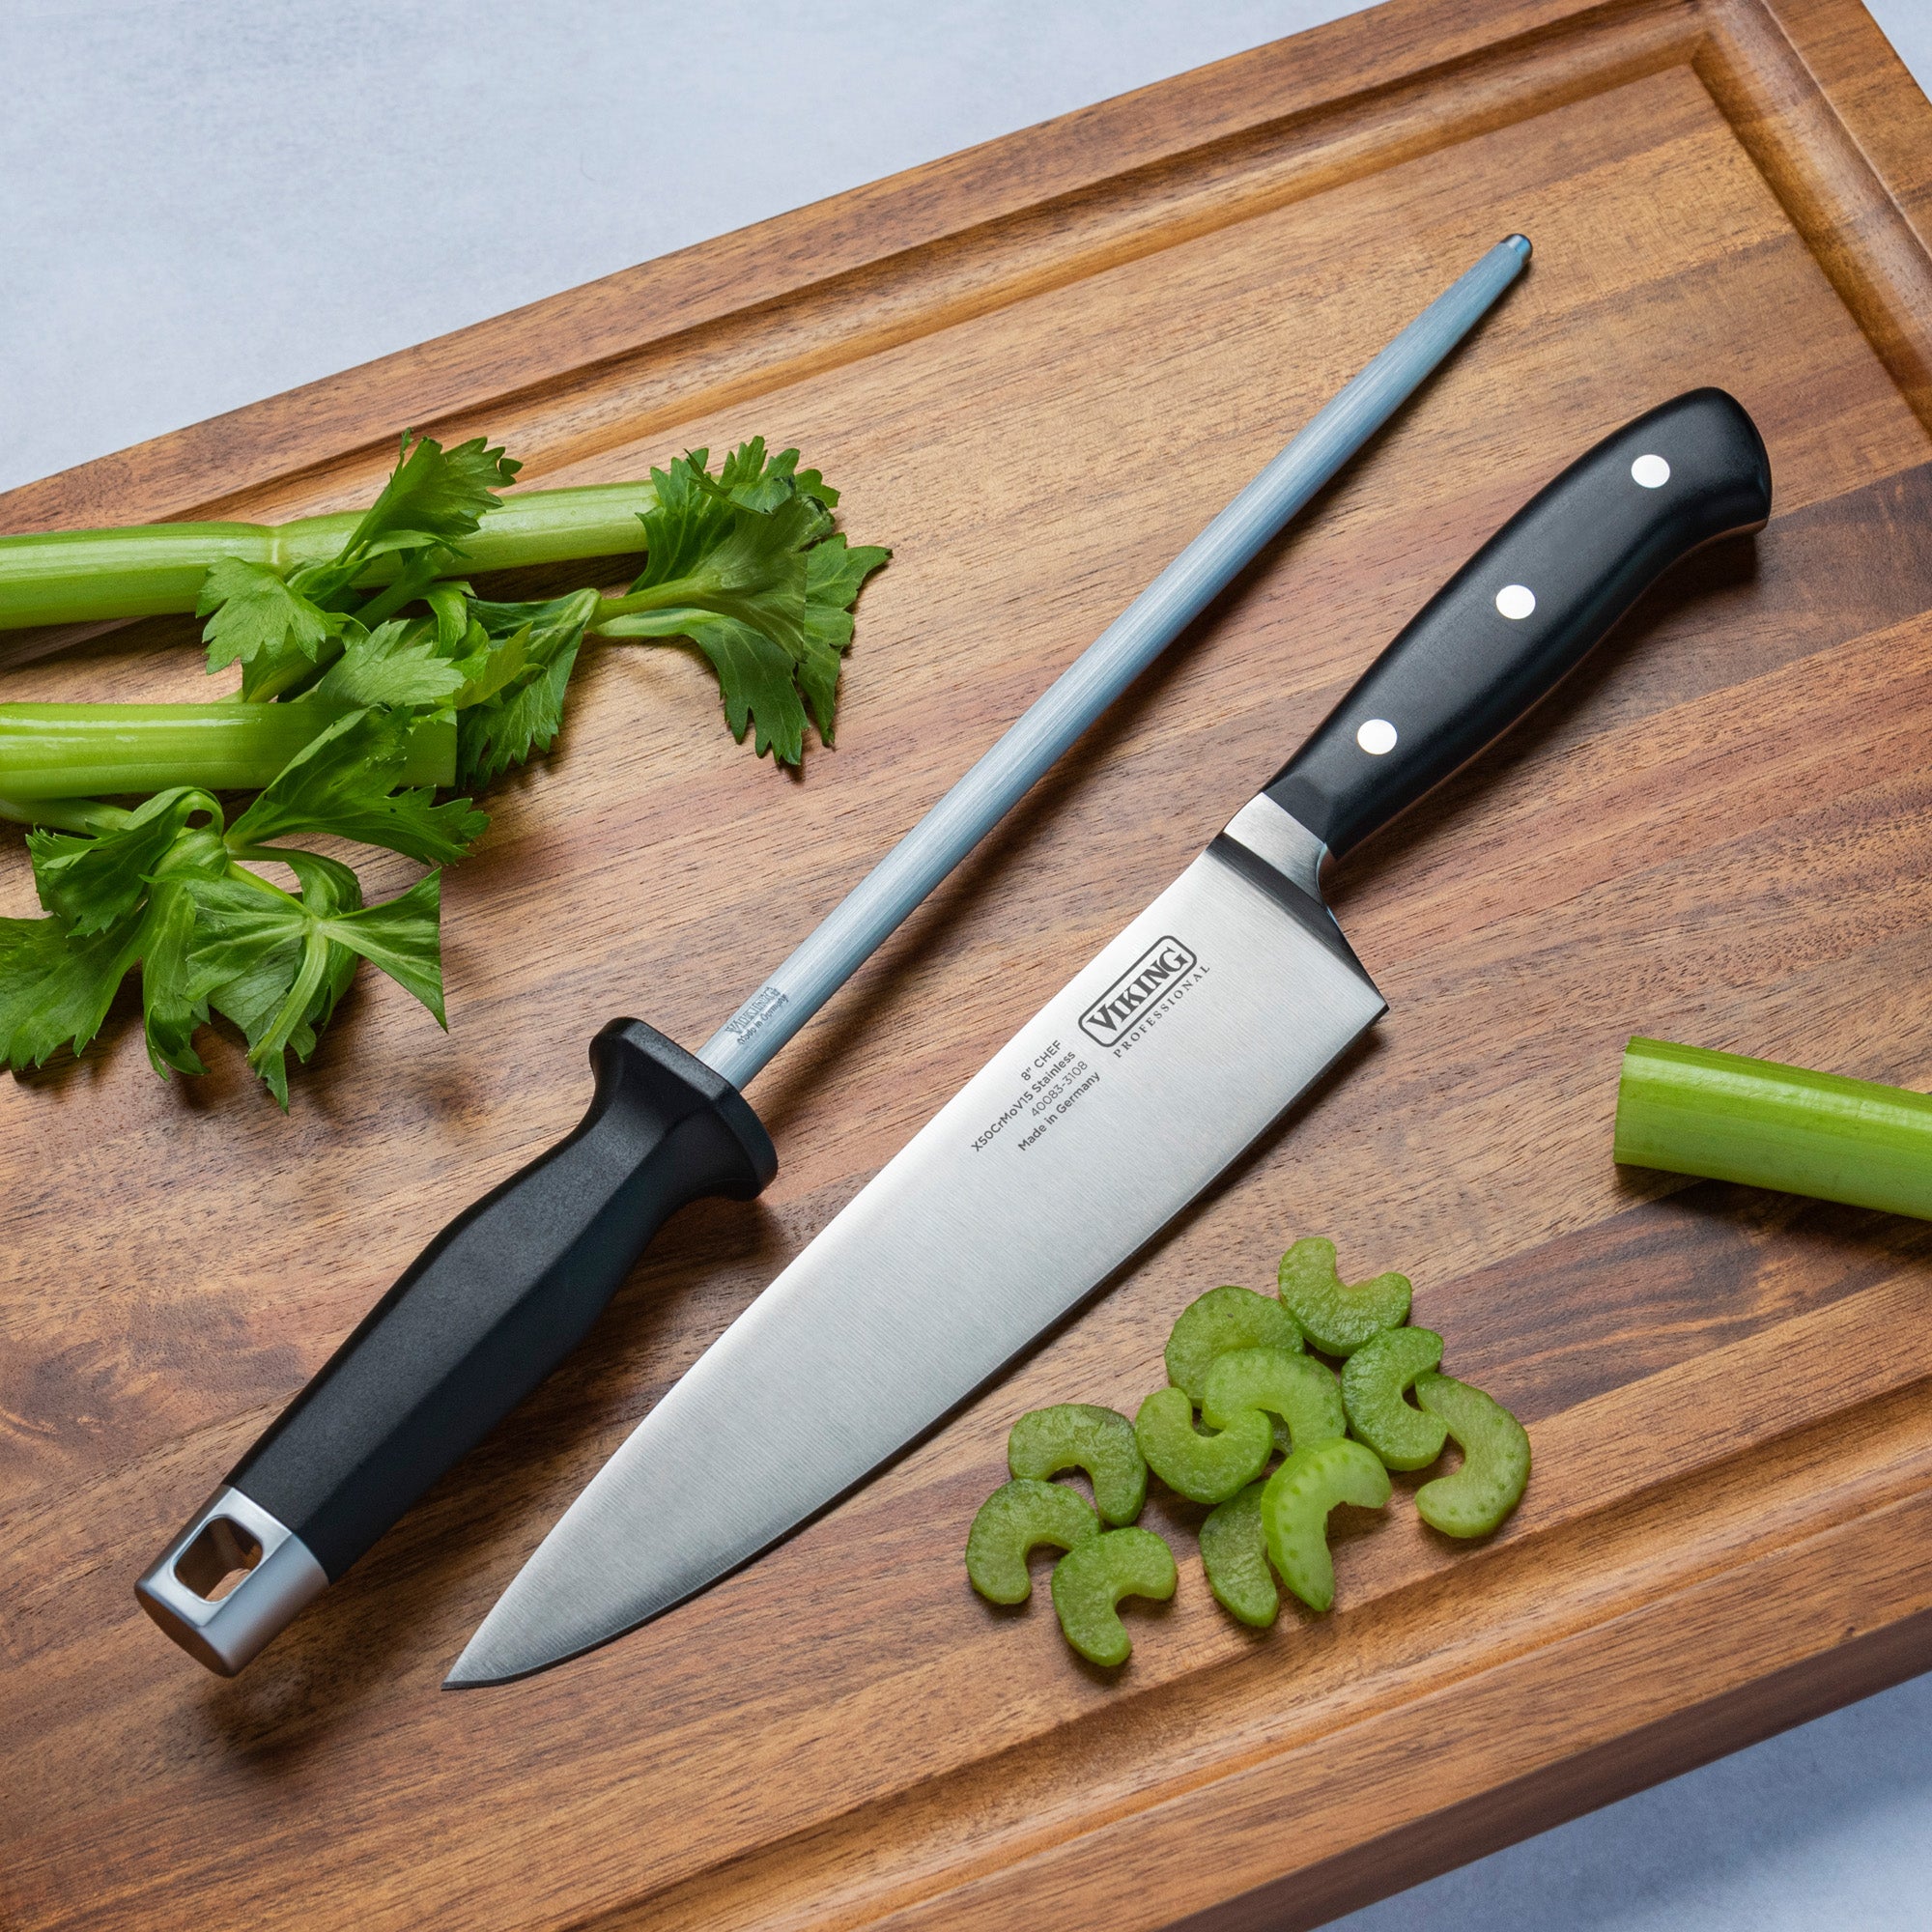 German Knives, Best German Kitchen Knives - House of Knives